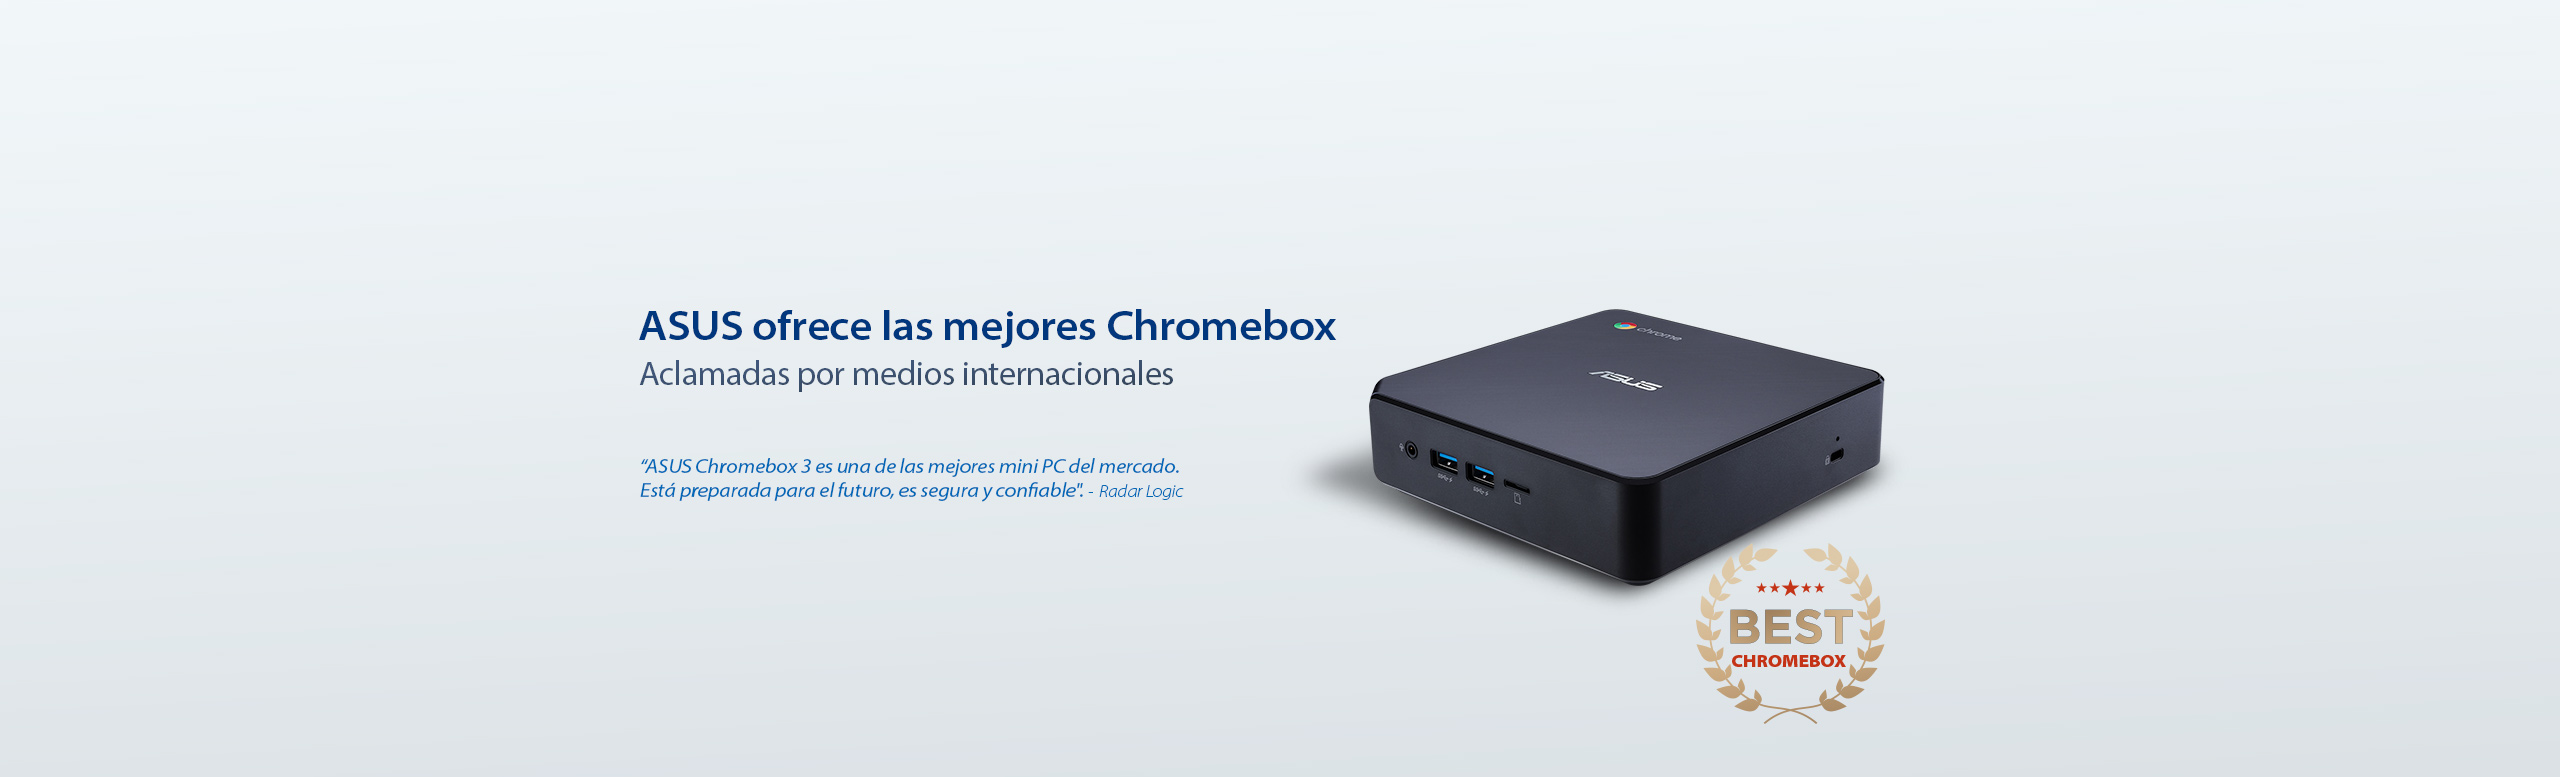 ASUS Chromebox 3